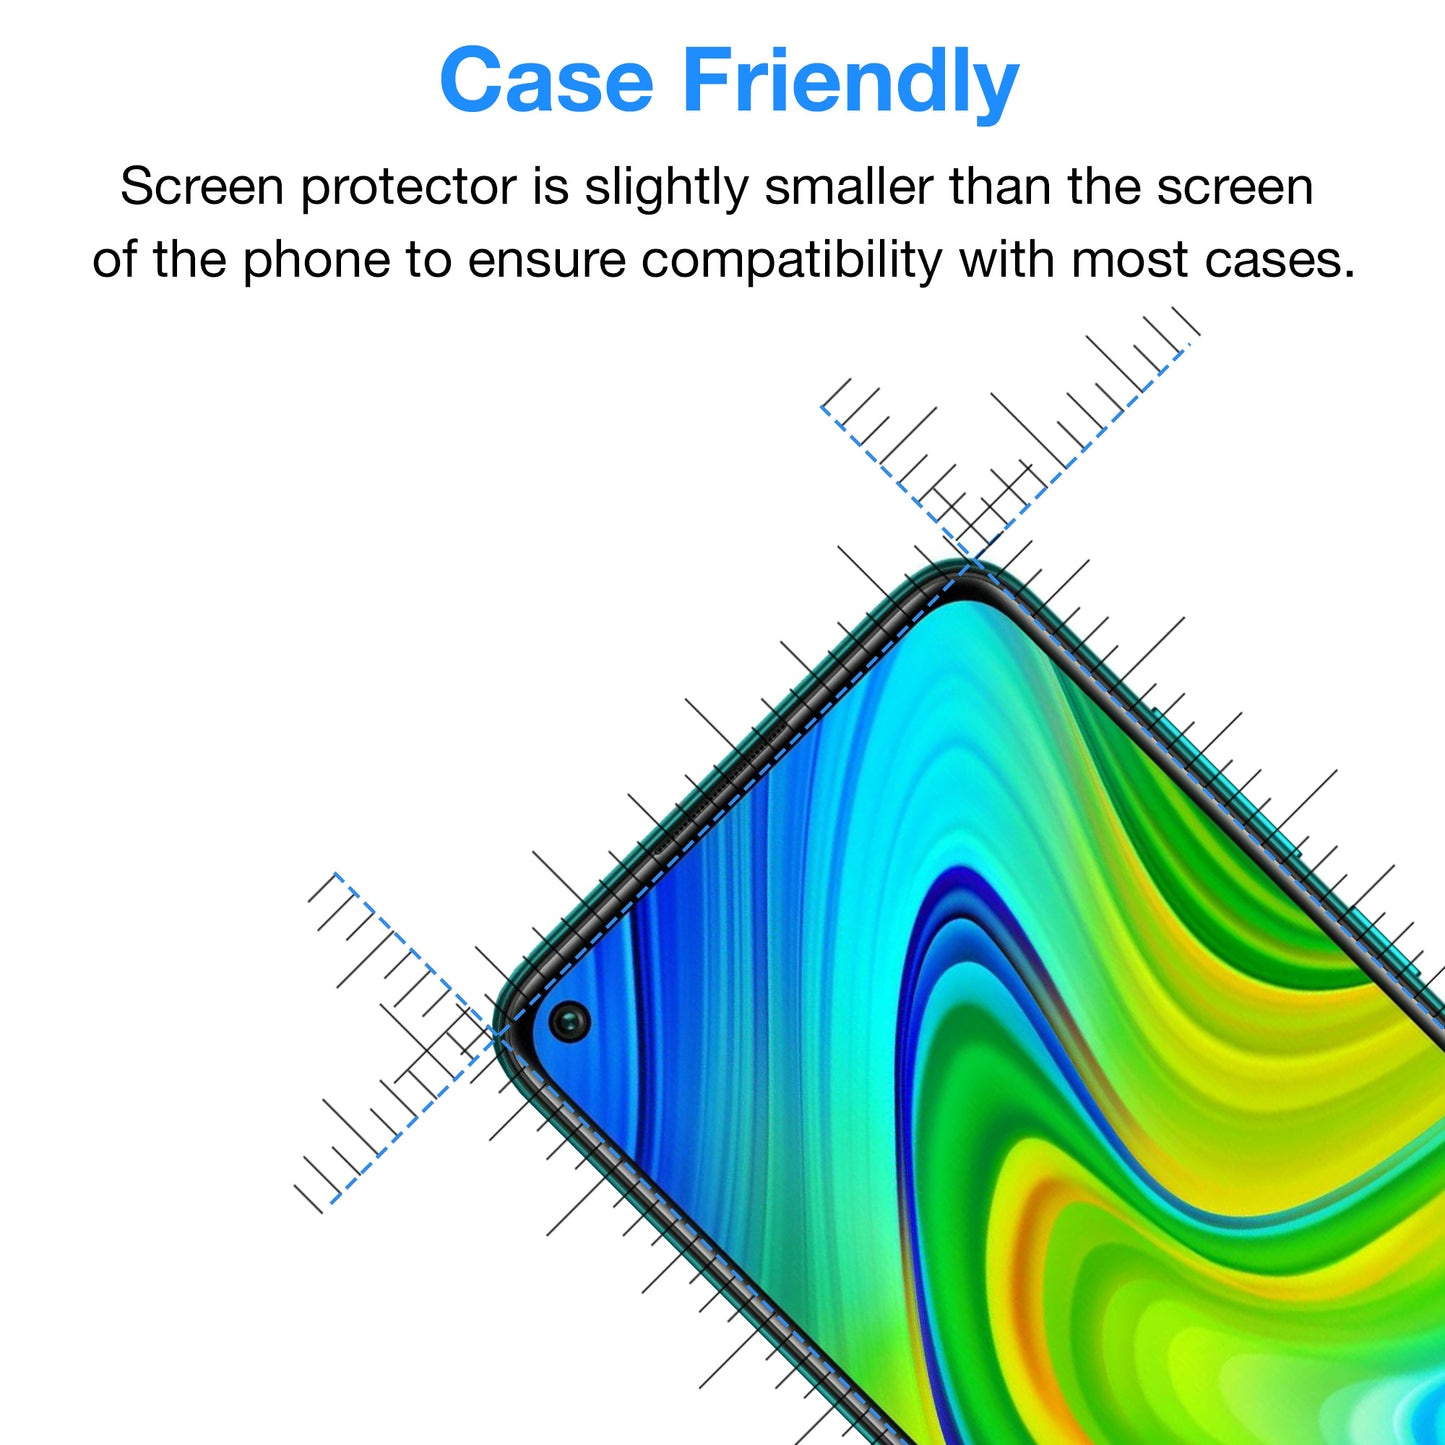 [3 Pack] MEZON Xiaomi Redmi Note 9 Anti-Glare Matte Screen Protector Case Friendly Film (Redmi Note 9, Matte)